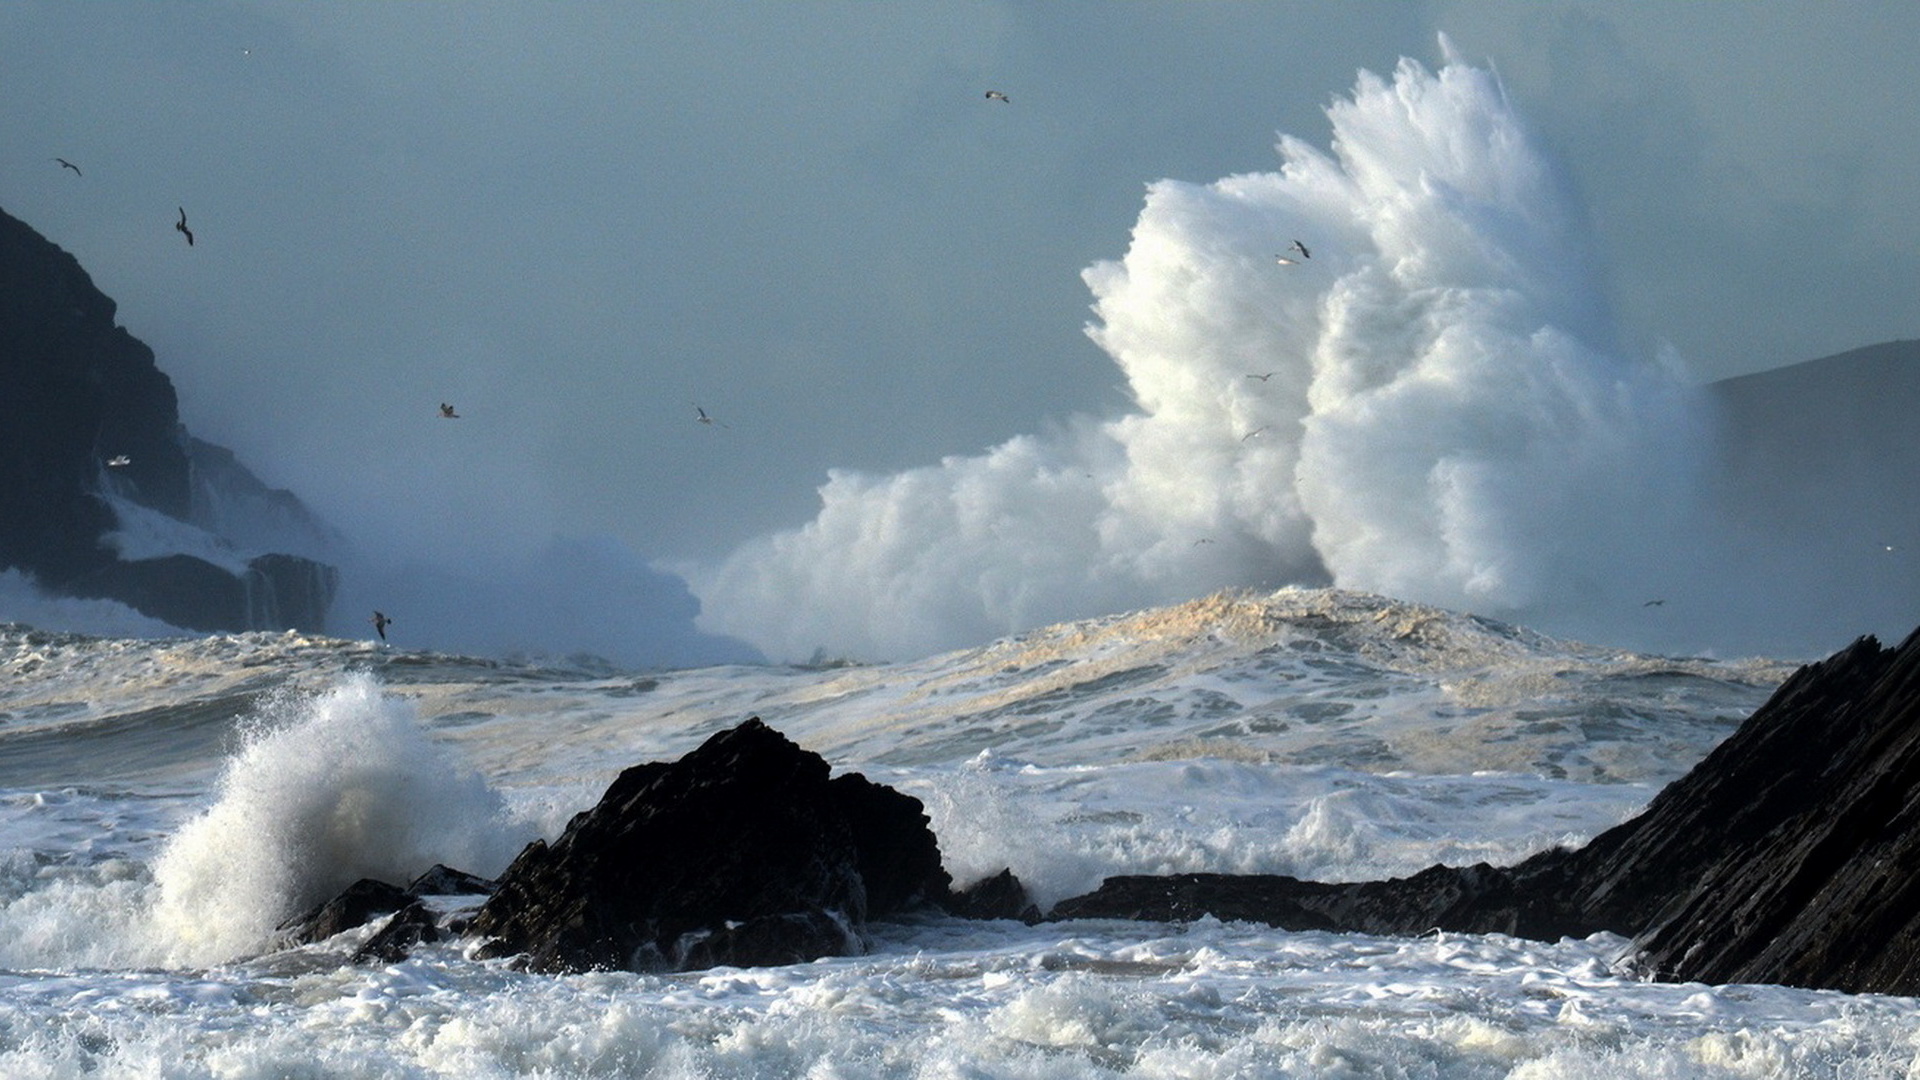 Шторм счет. Генисаретское озеро шторм. Исландия шторм. Сильный шторм. Море шторм.